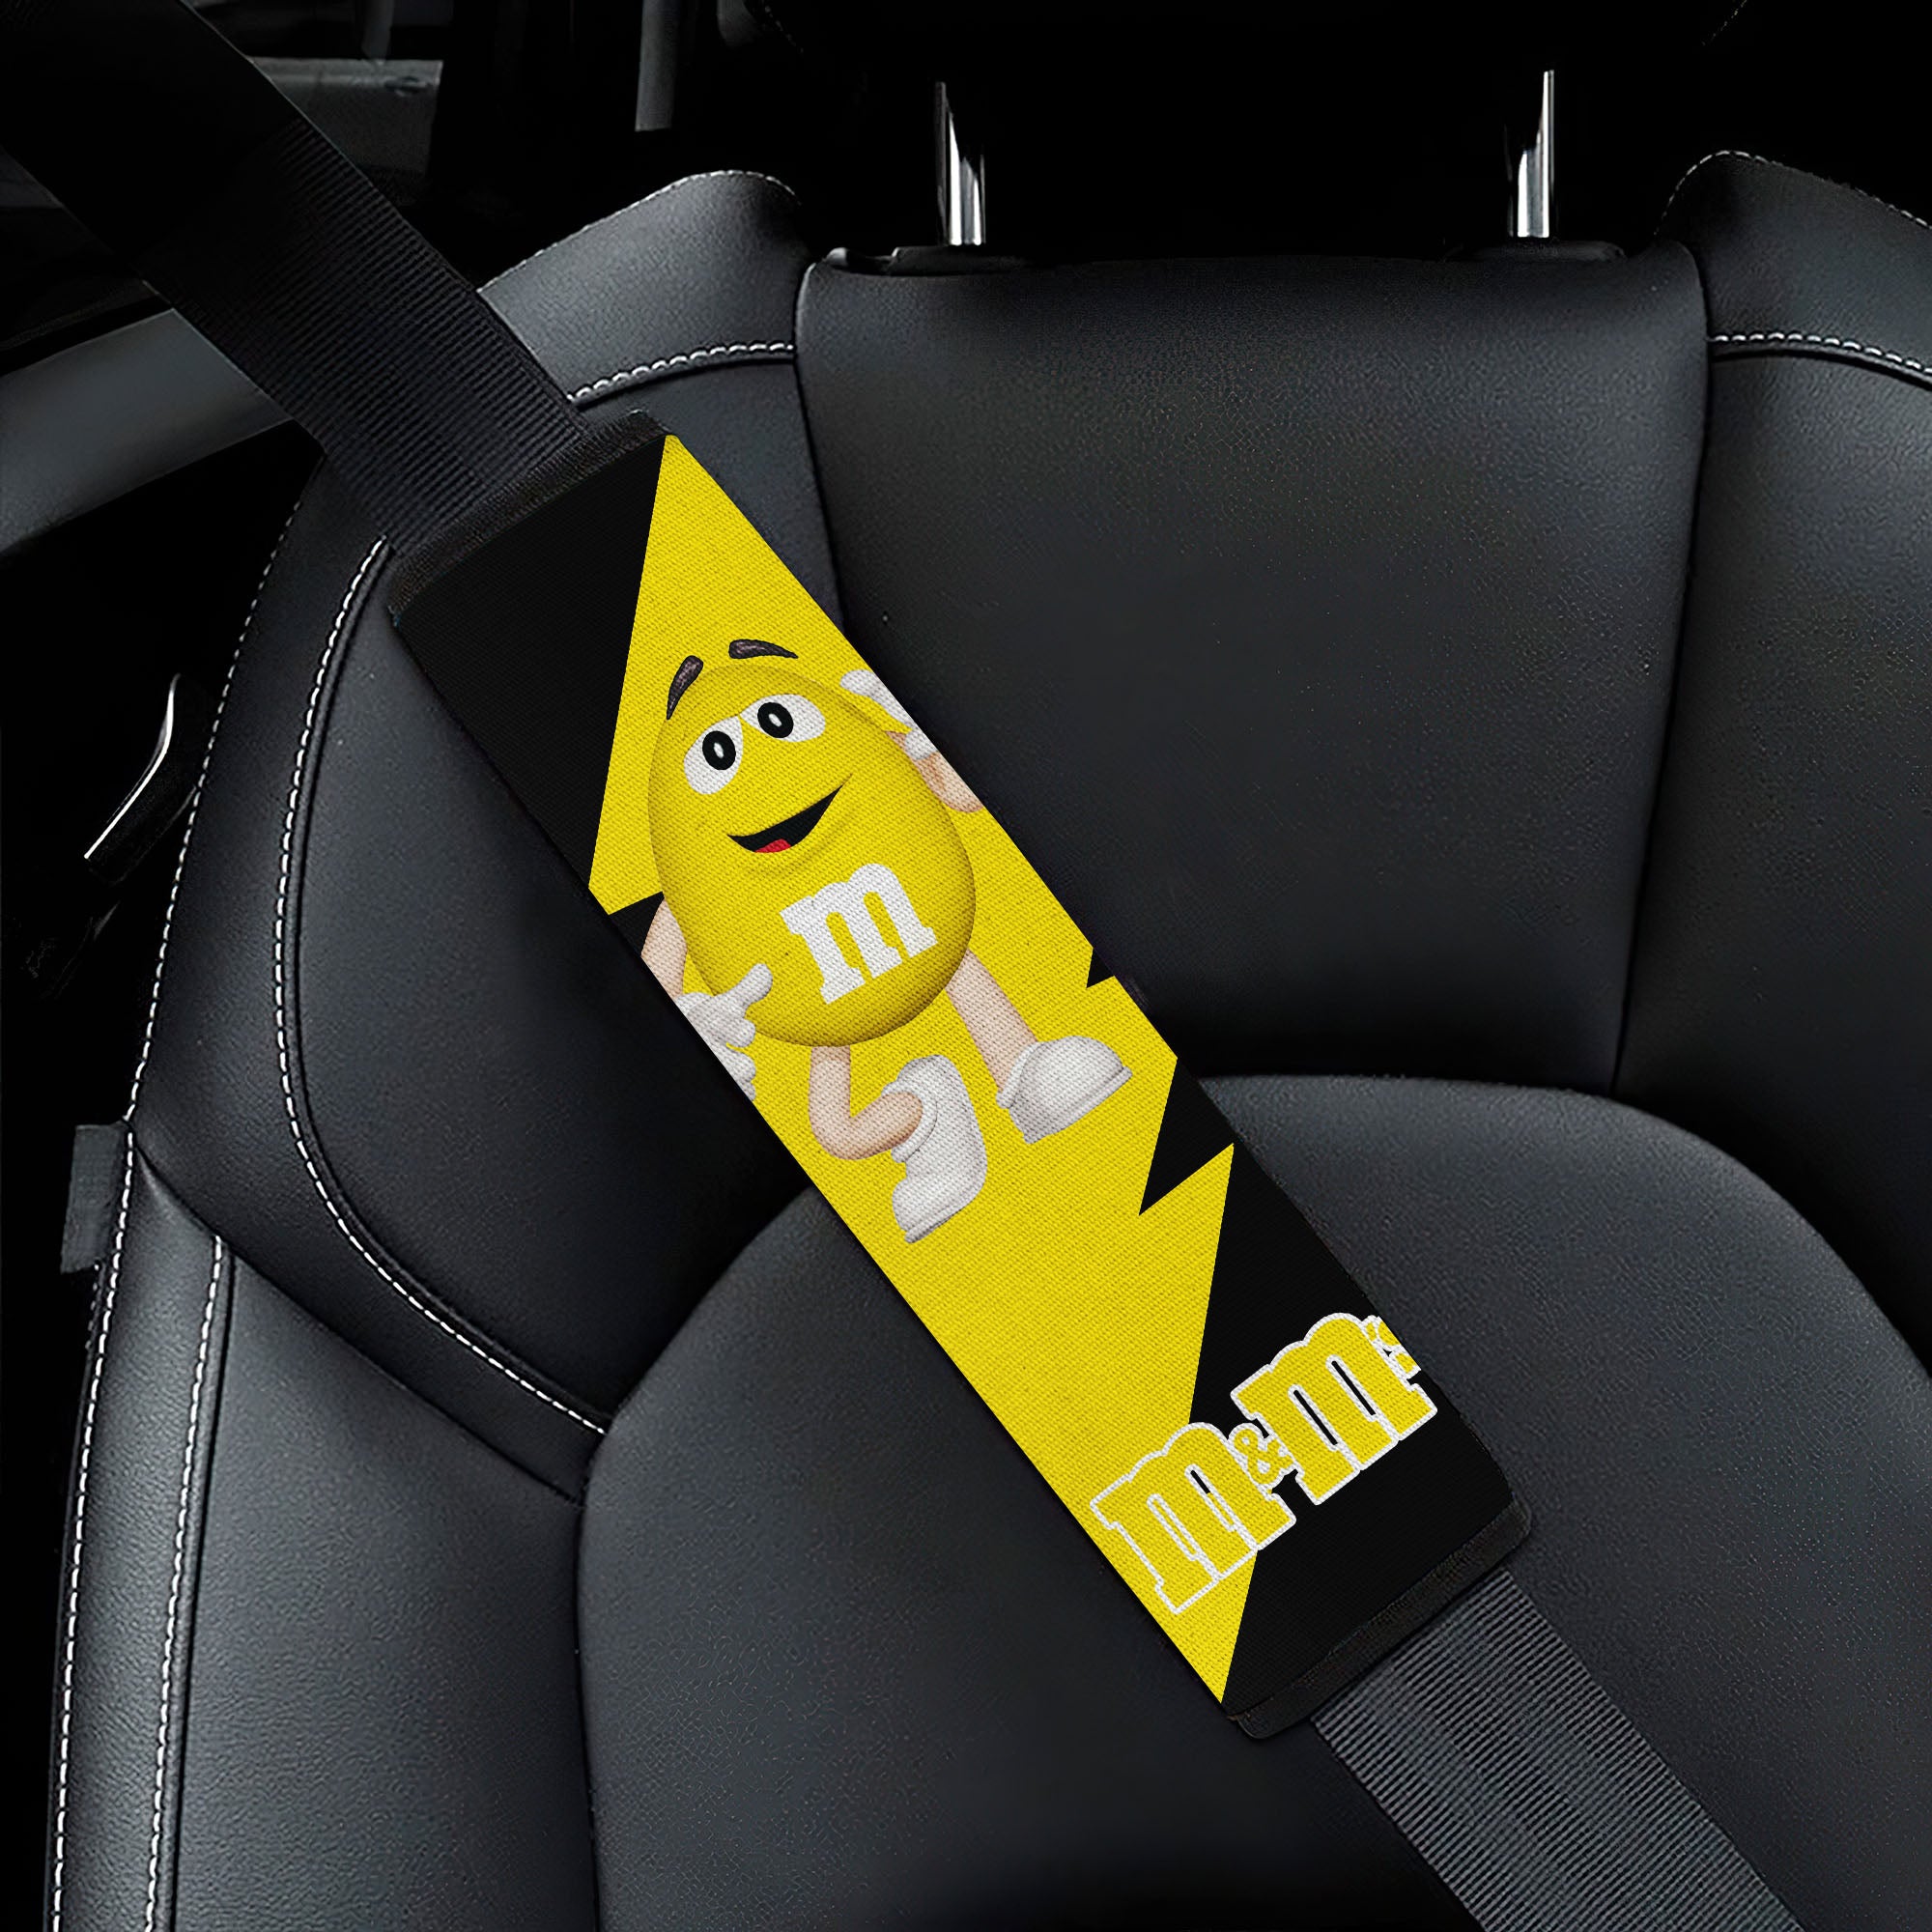 M&M's Candy Ice Cream Cones Chocolate Yellow car seat belt covers Custom Car Accessories